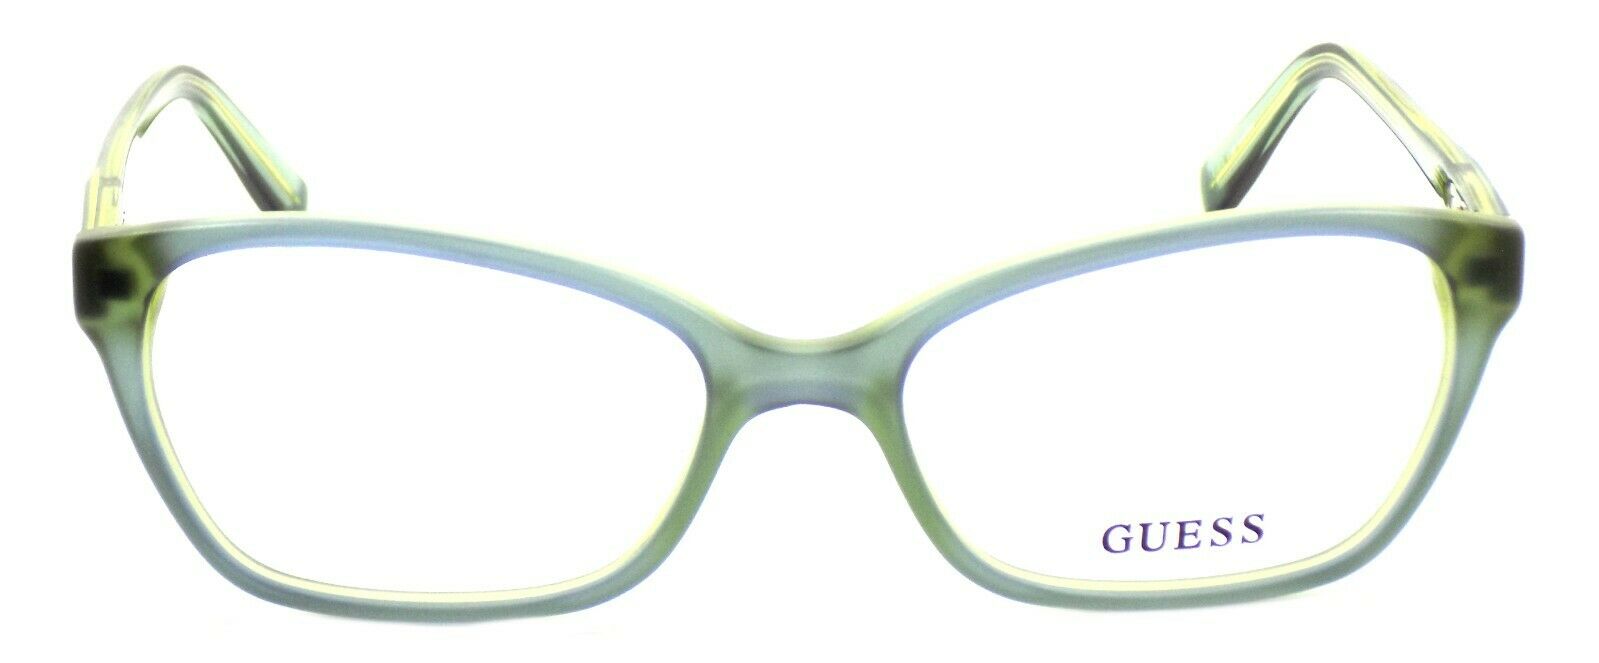 2-GUESS GU2466 BLGRN Women's Eyeglasses Frames 52-17-135 Blue / Green + CASE-715583285583-IKSpecs